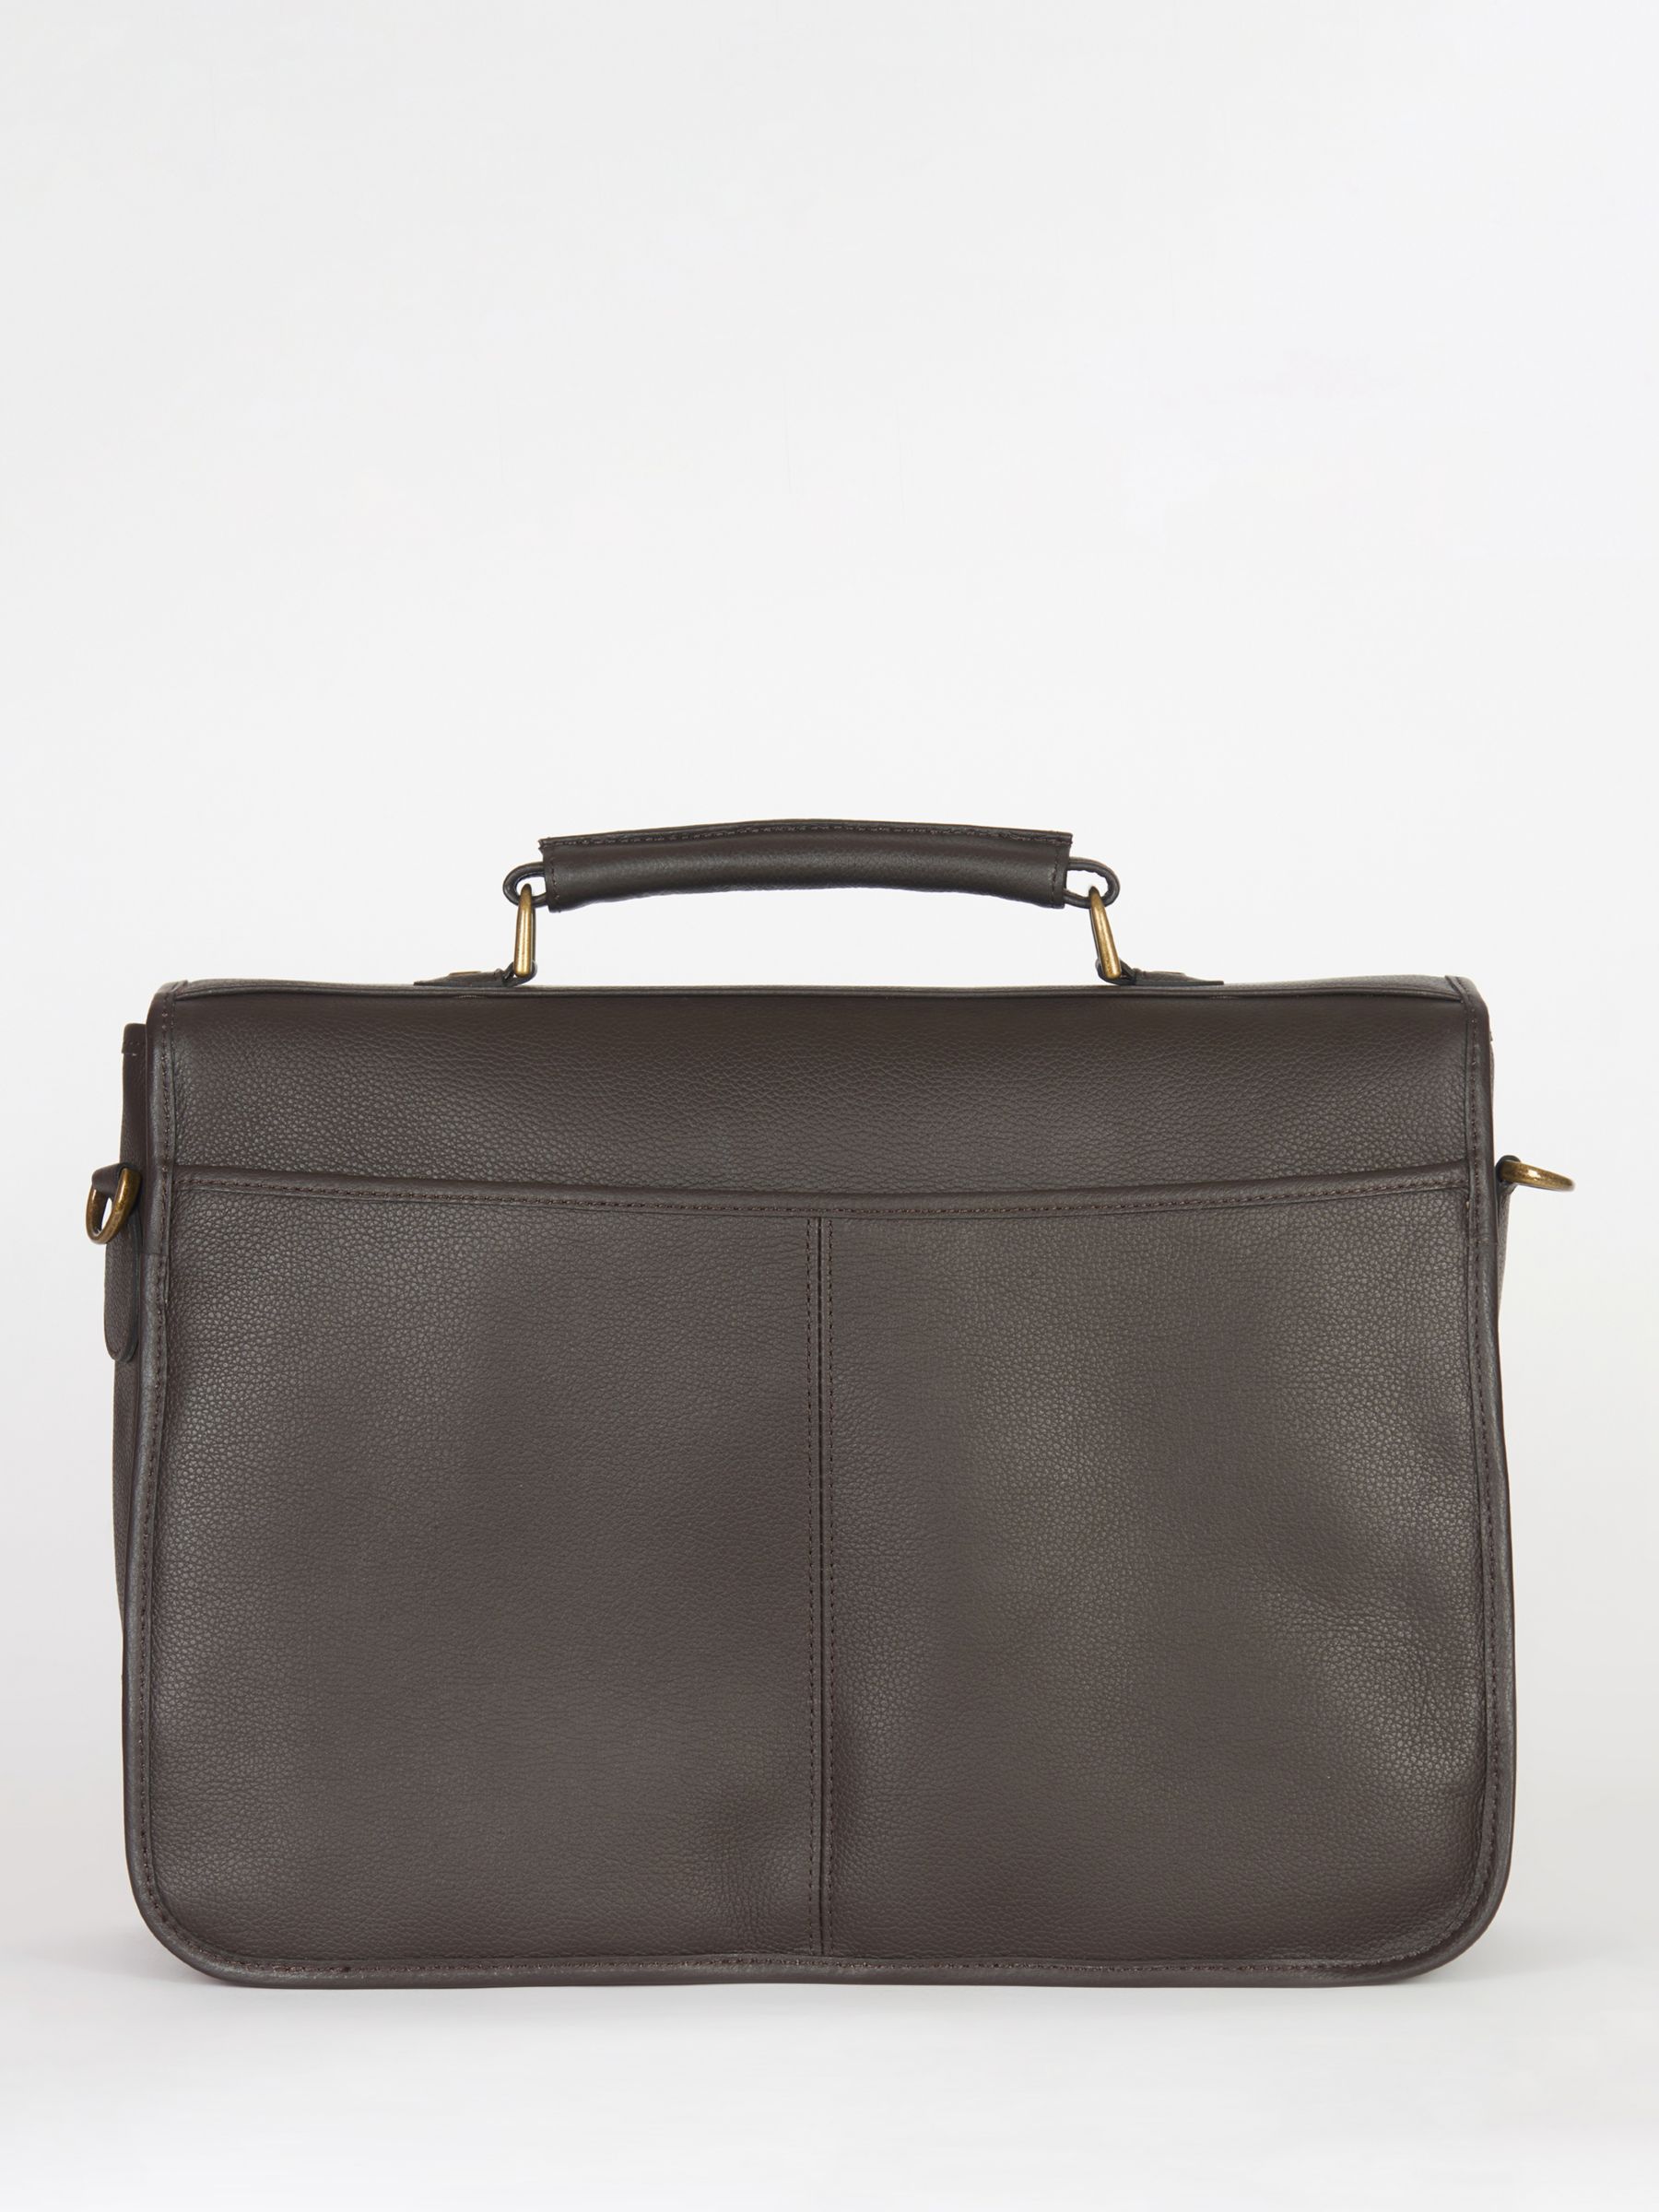 Barbour Leather Briefcase, Dark Brown at John Lewis